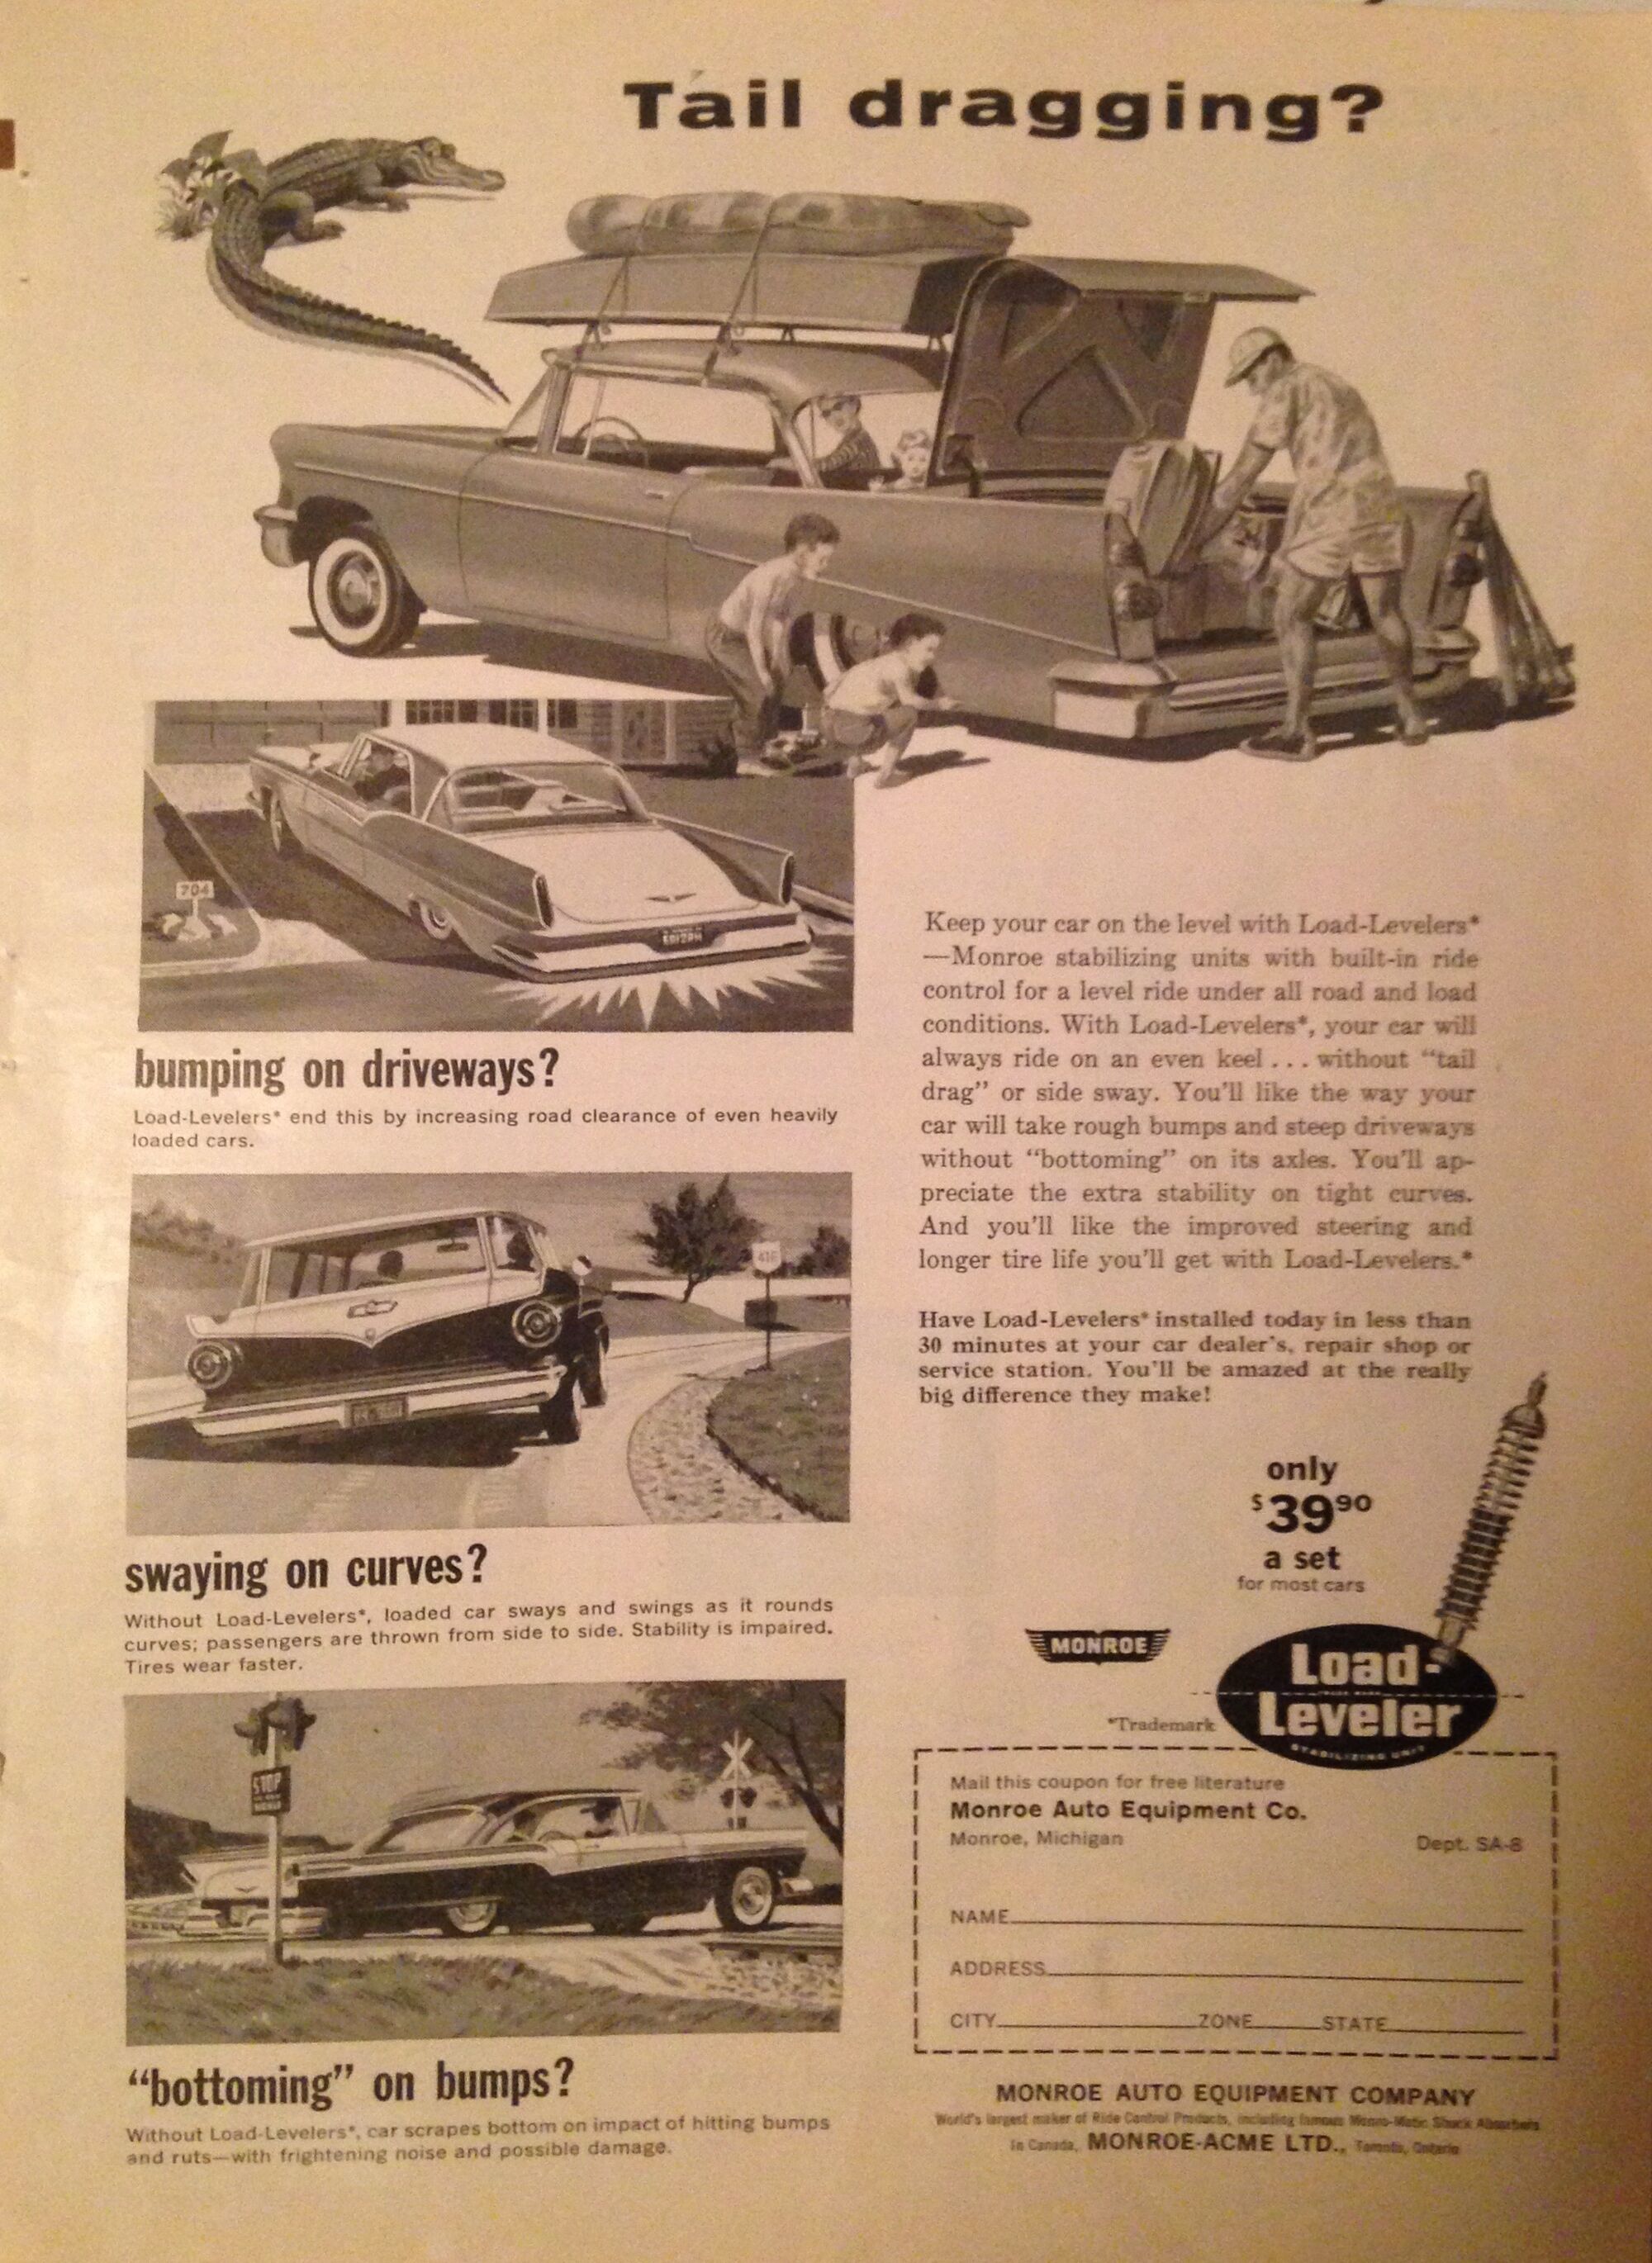 Monroe Auto Equipment Company | MyCompanies Wiki | Fandom